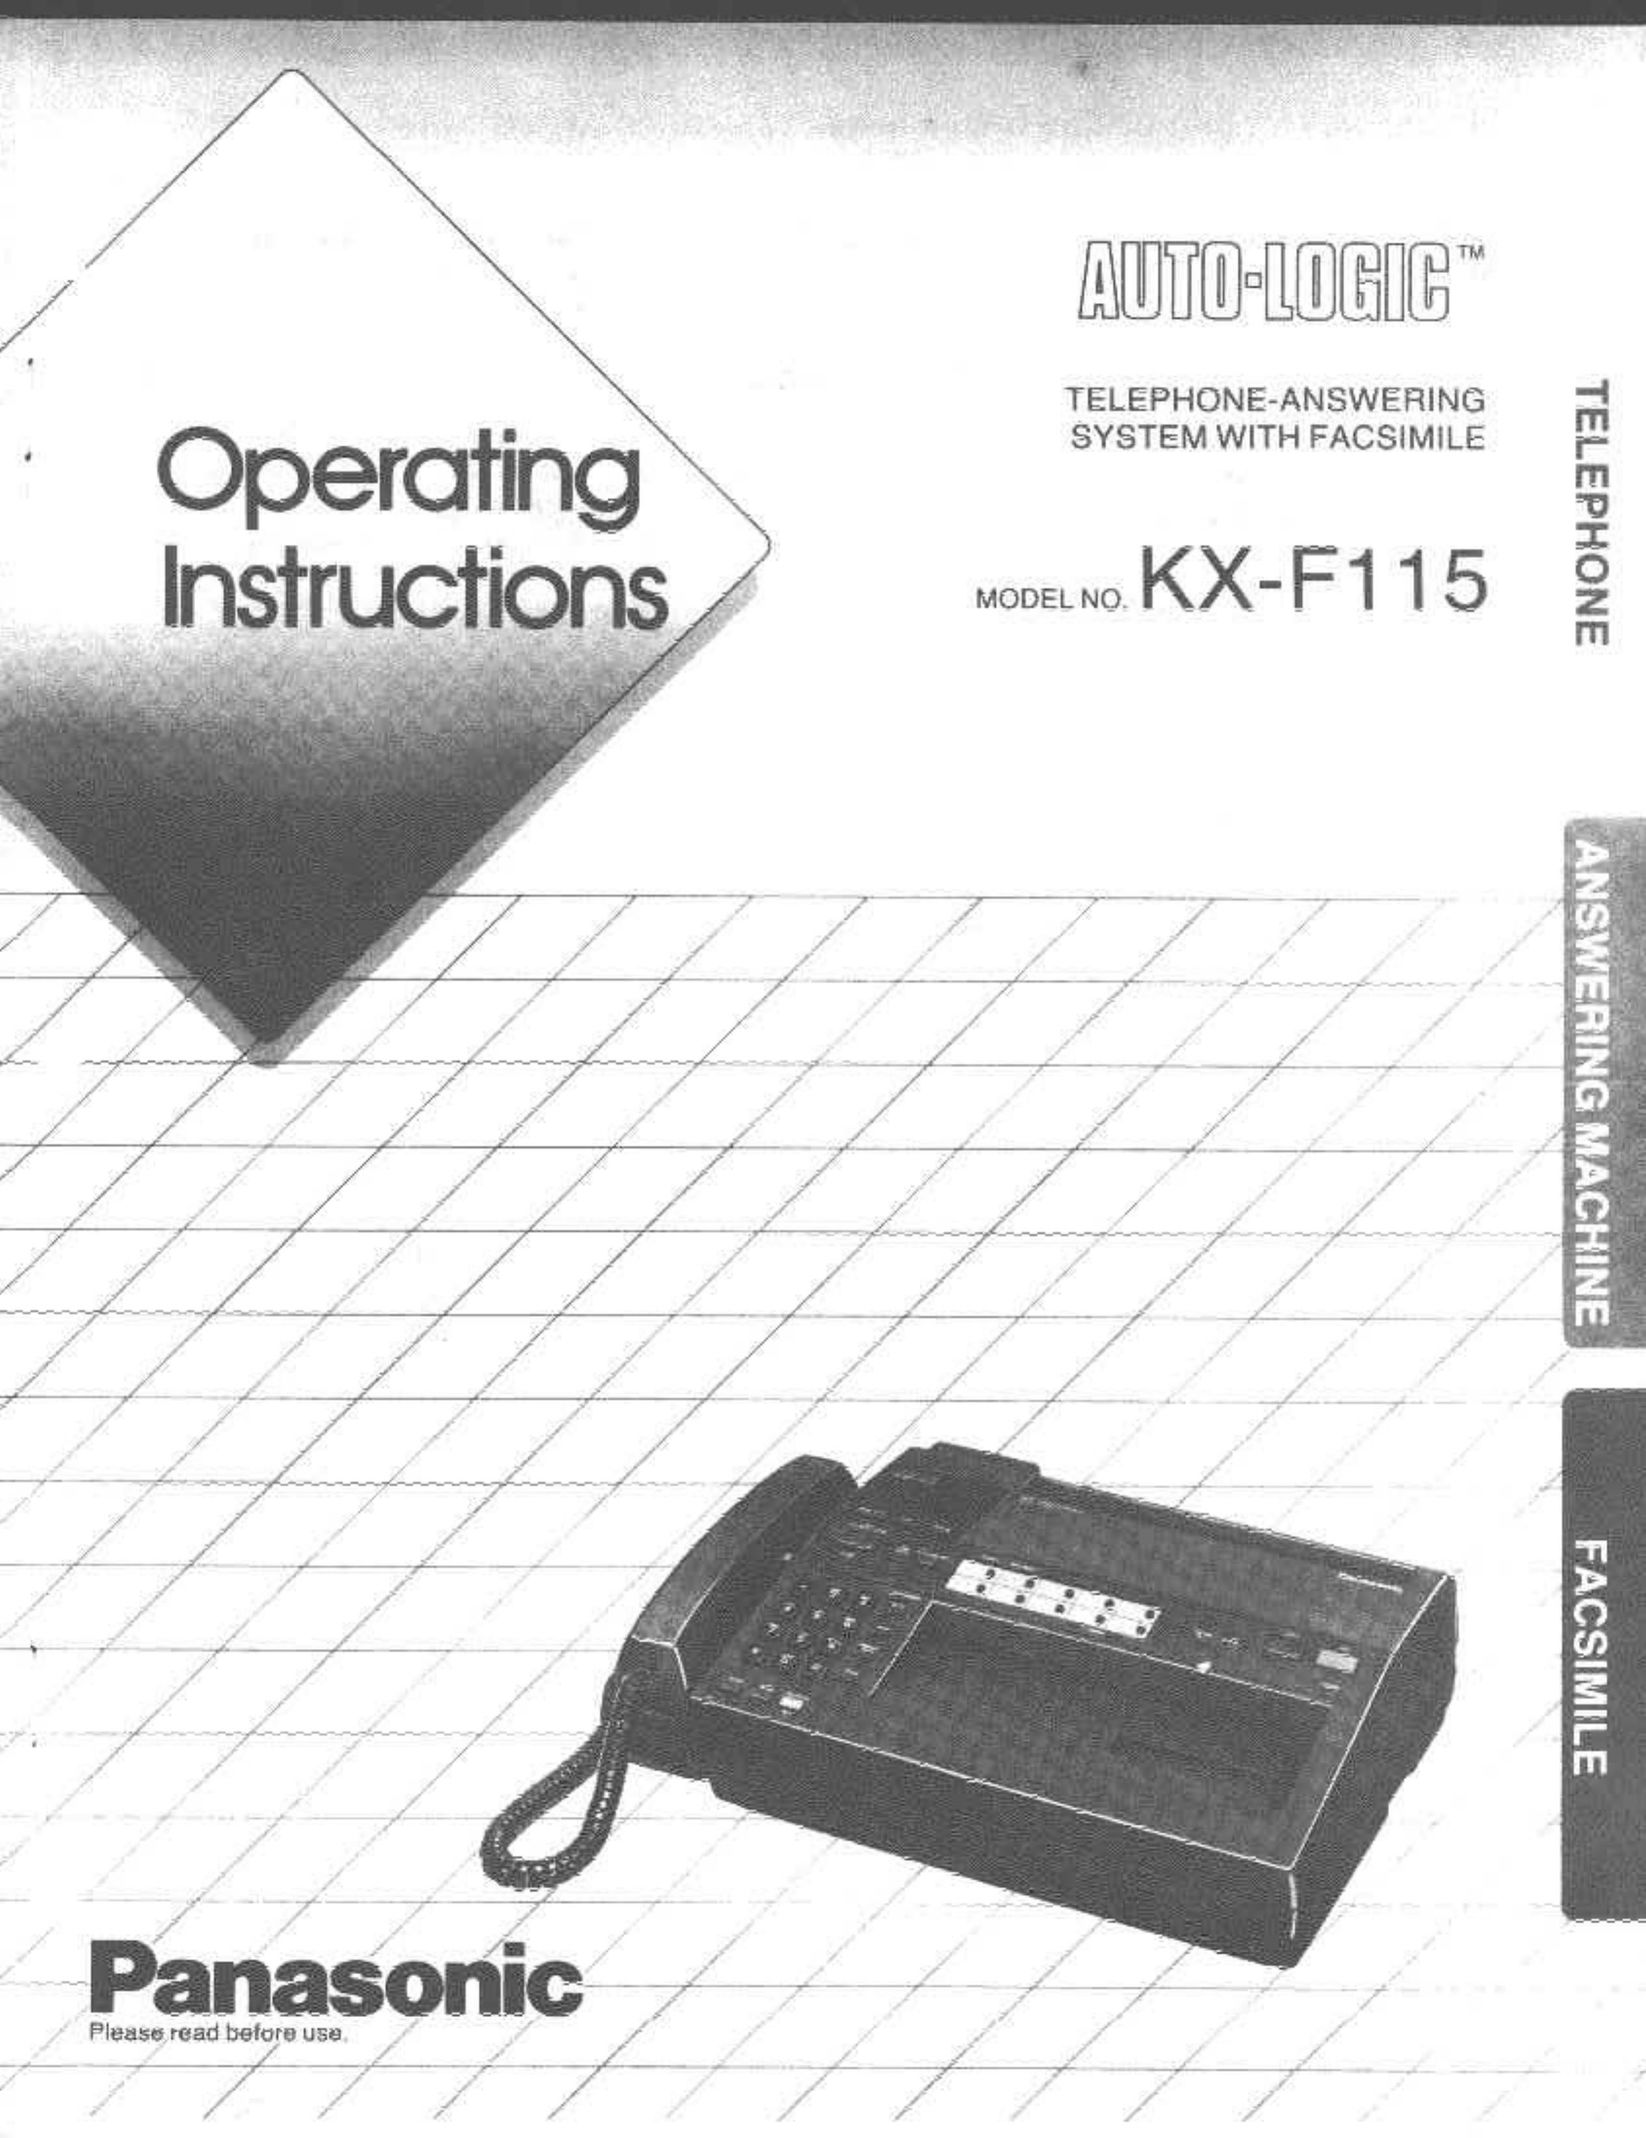 Panasonic KX-F115 Answering Machine User Manual